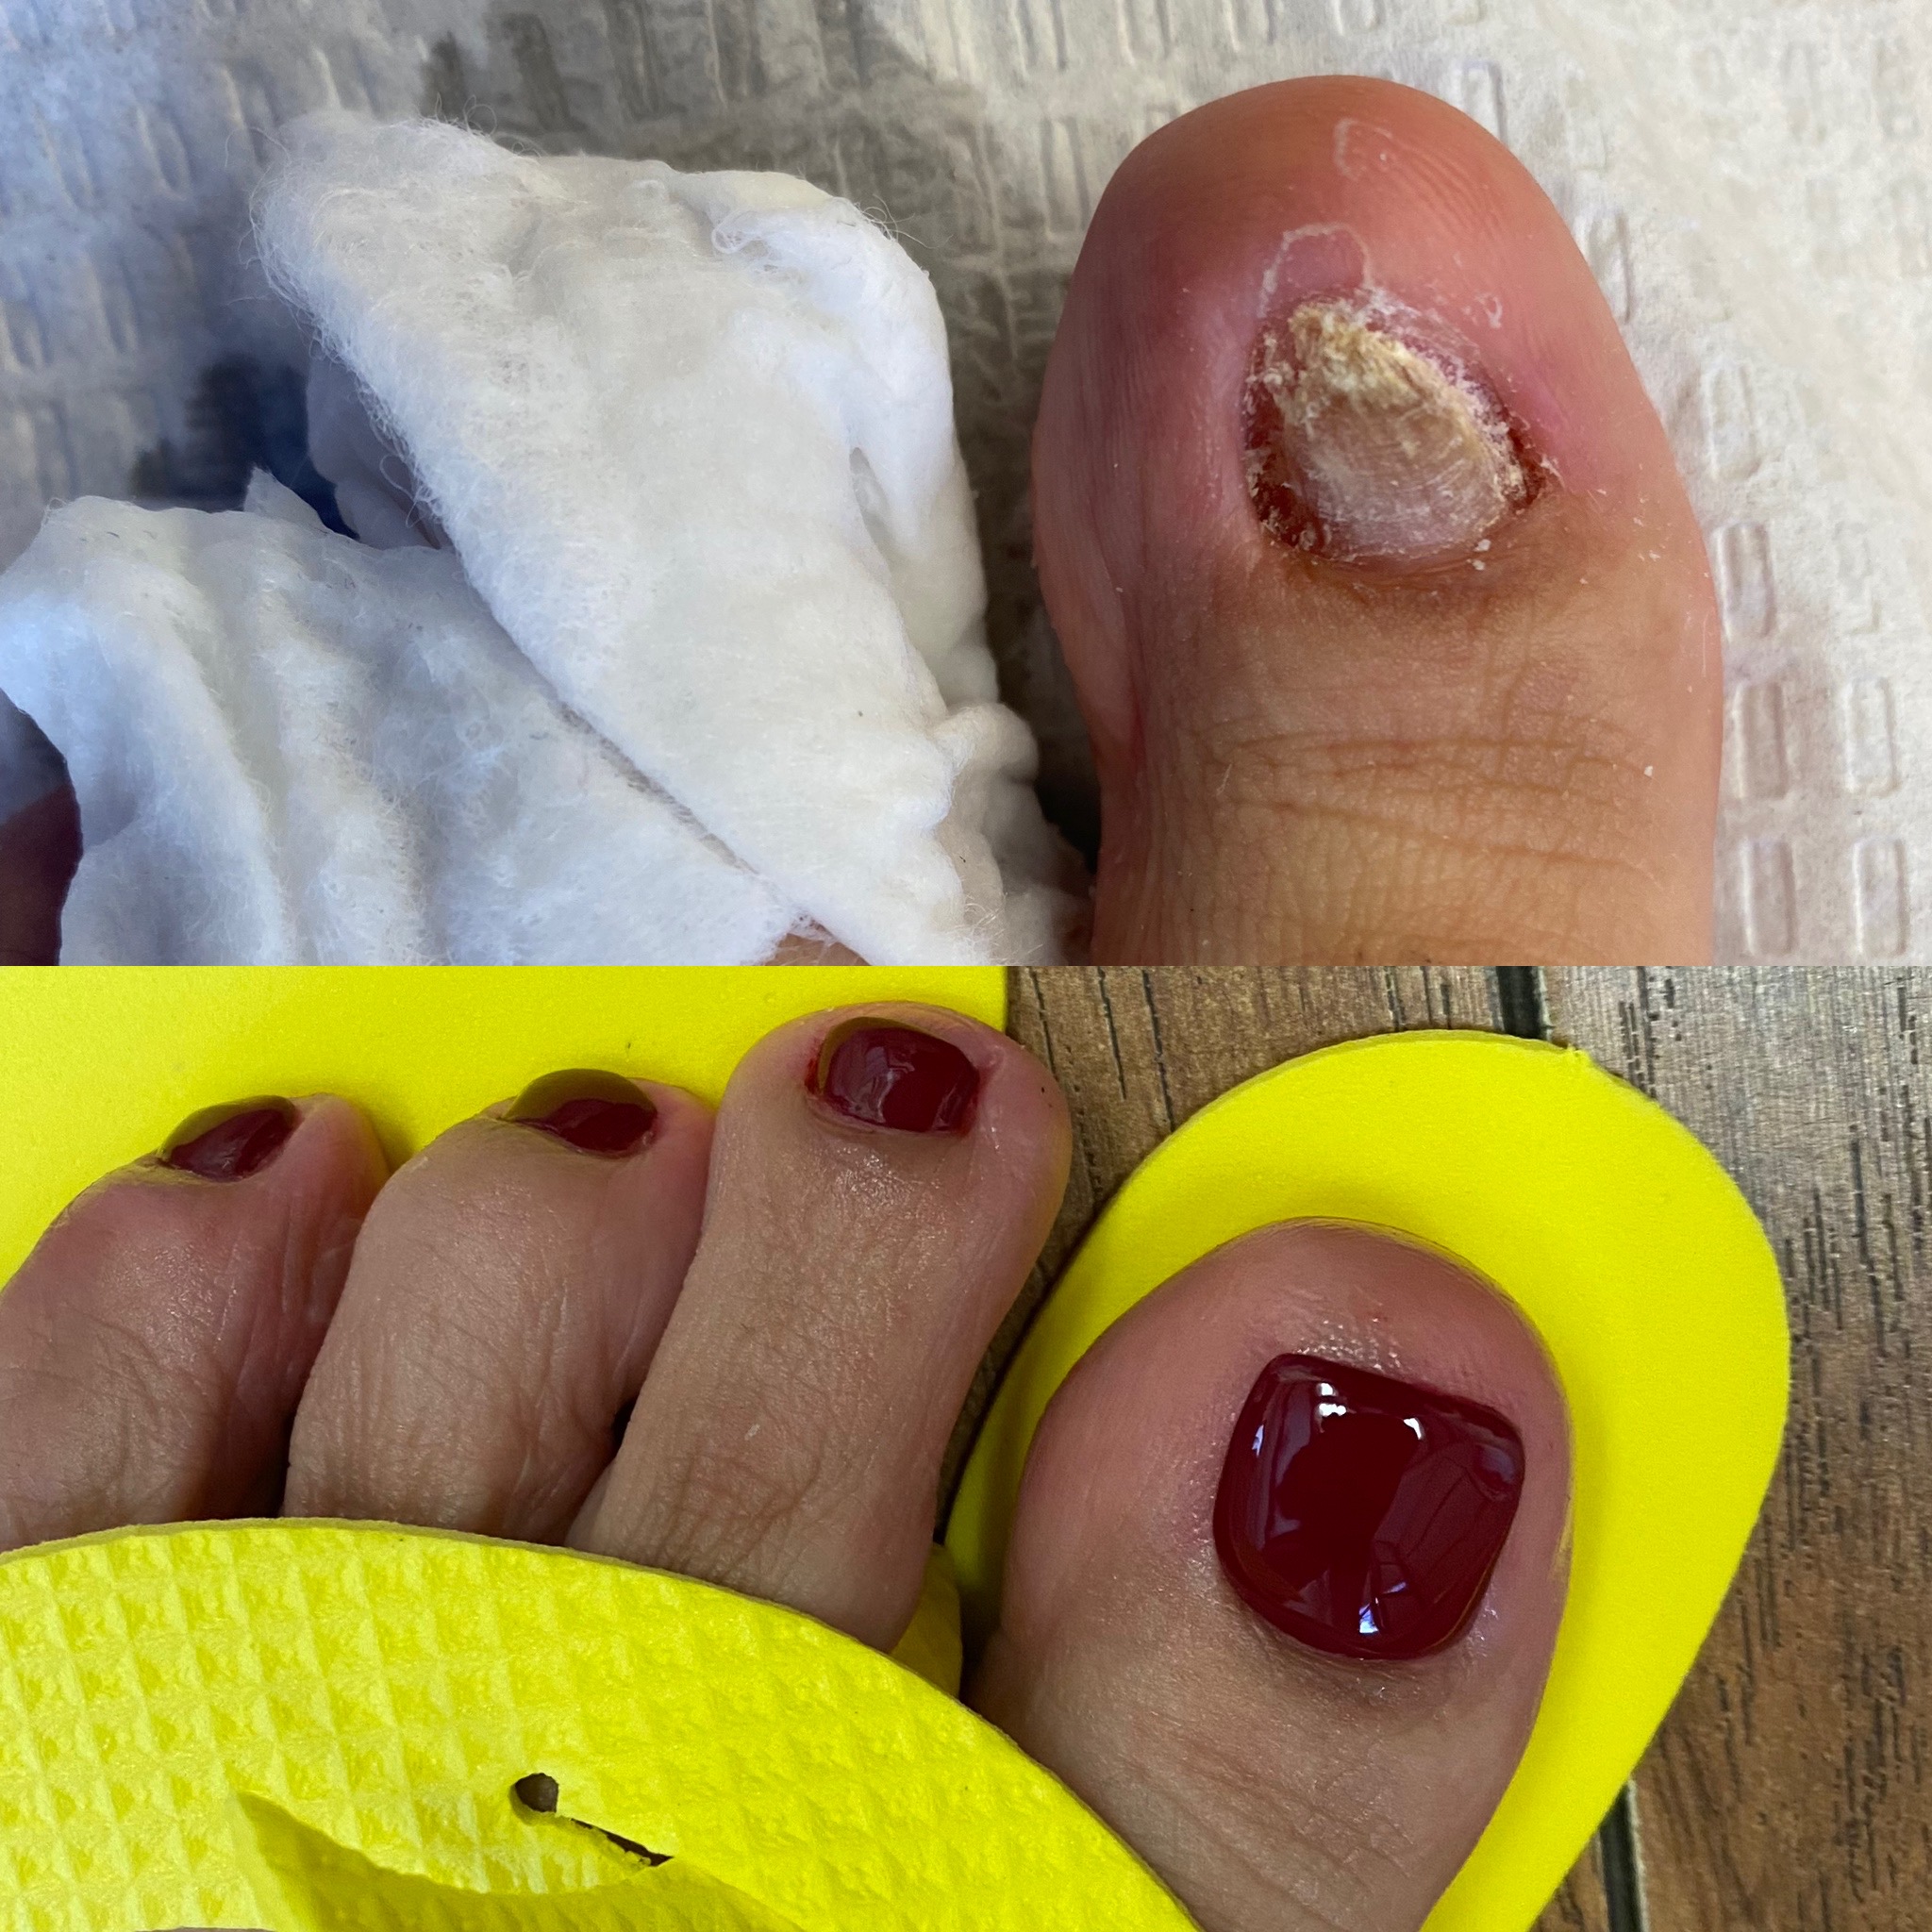 (Top) Before Keryflex treatment, toenail restoration